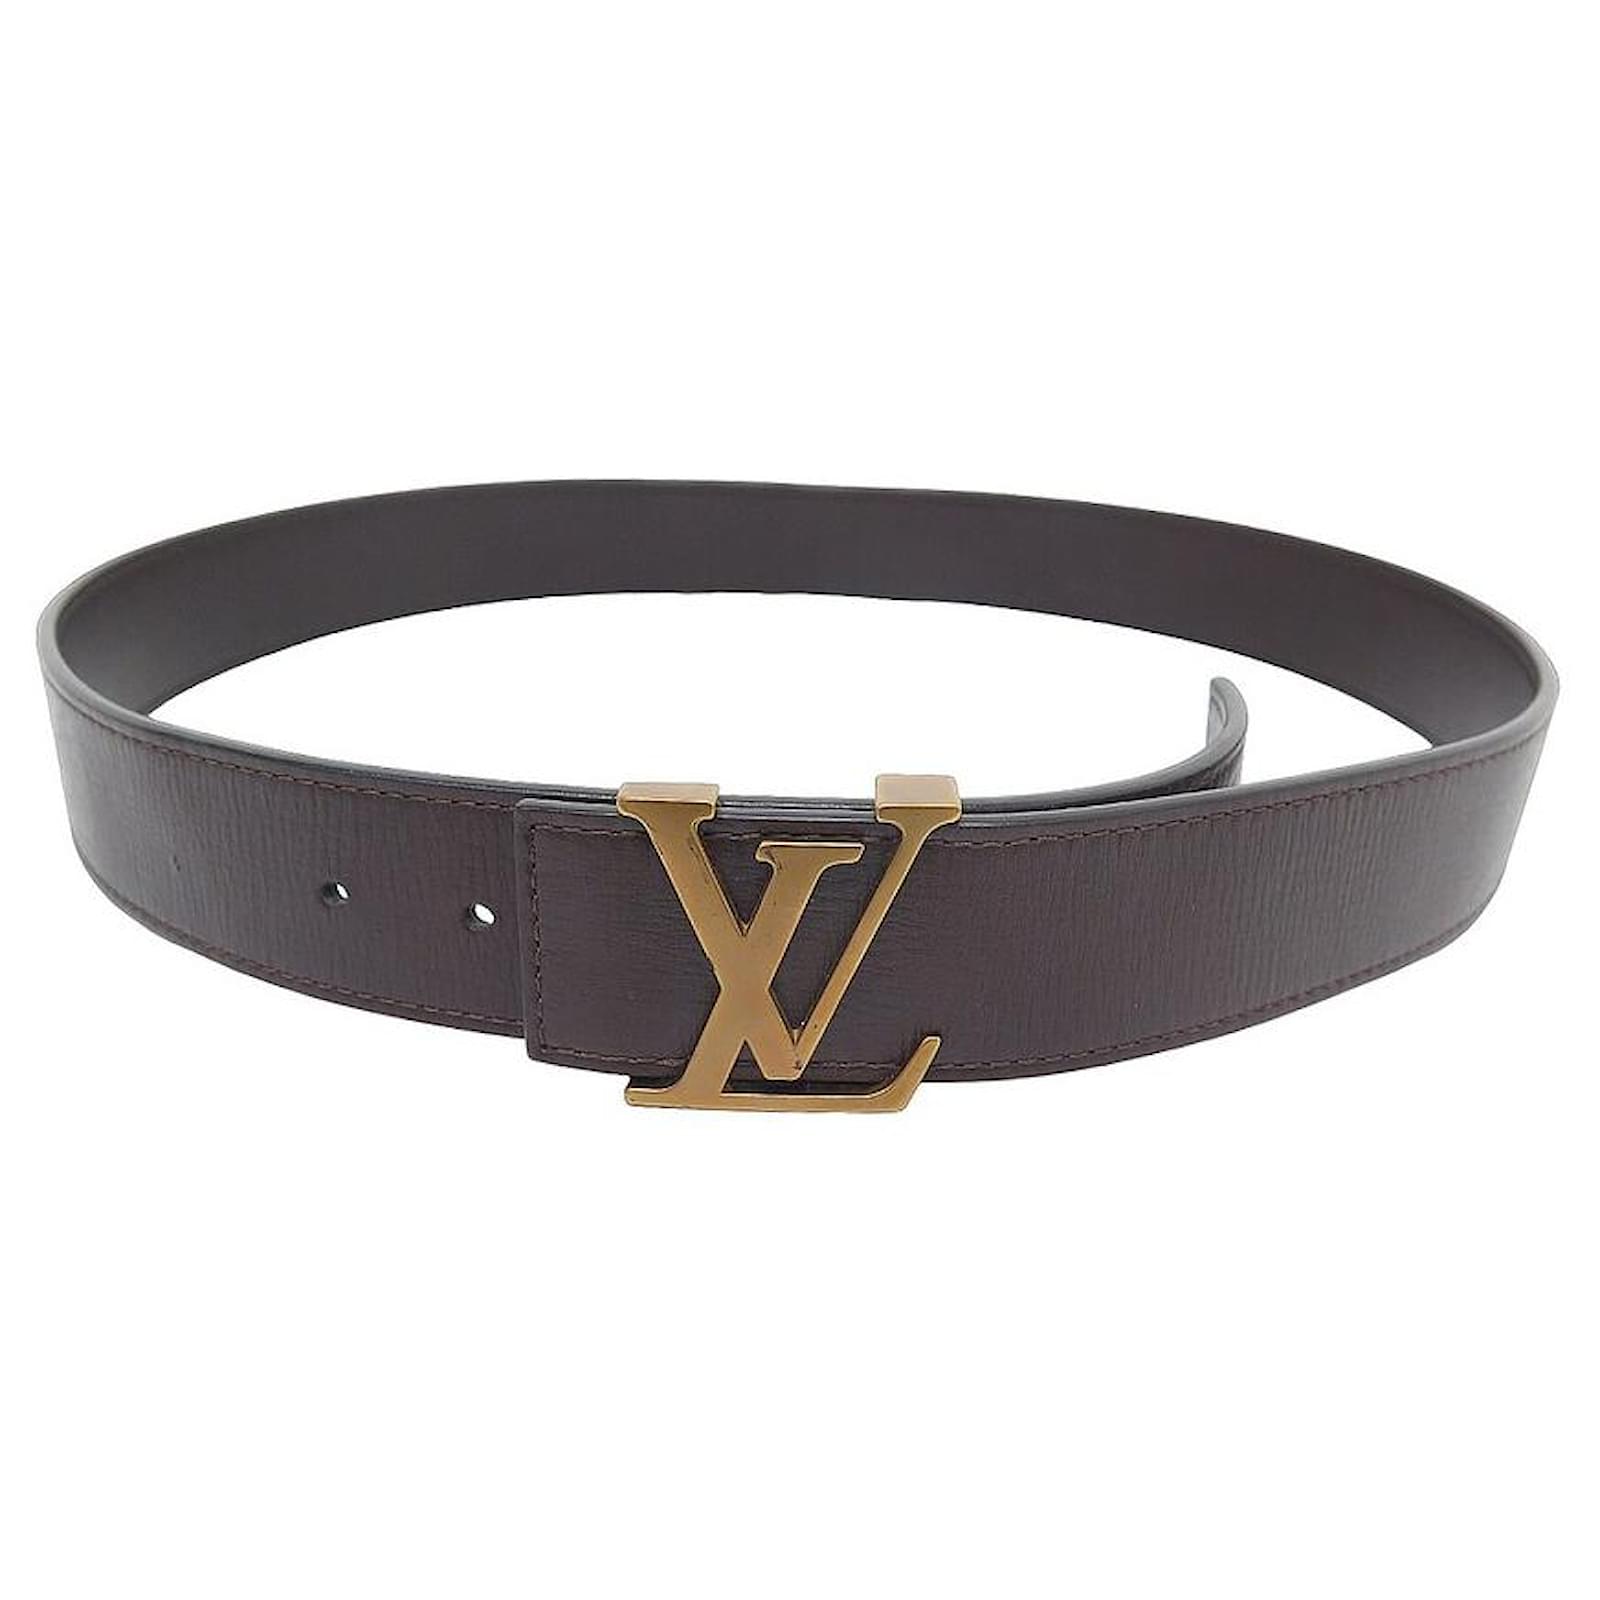 Cintura louis vuitton in tela marrone di Louis Vuitton in Marrone